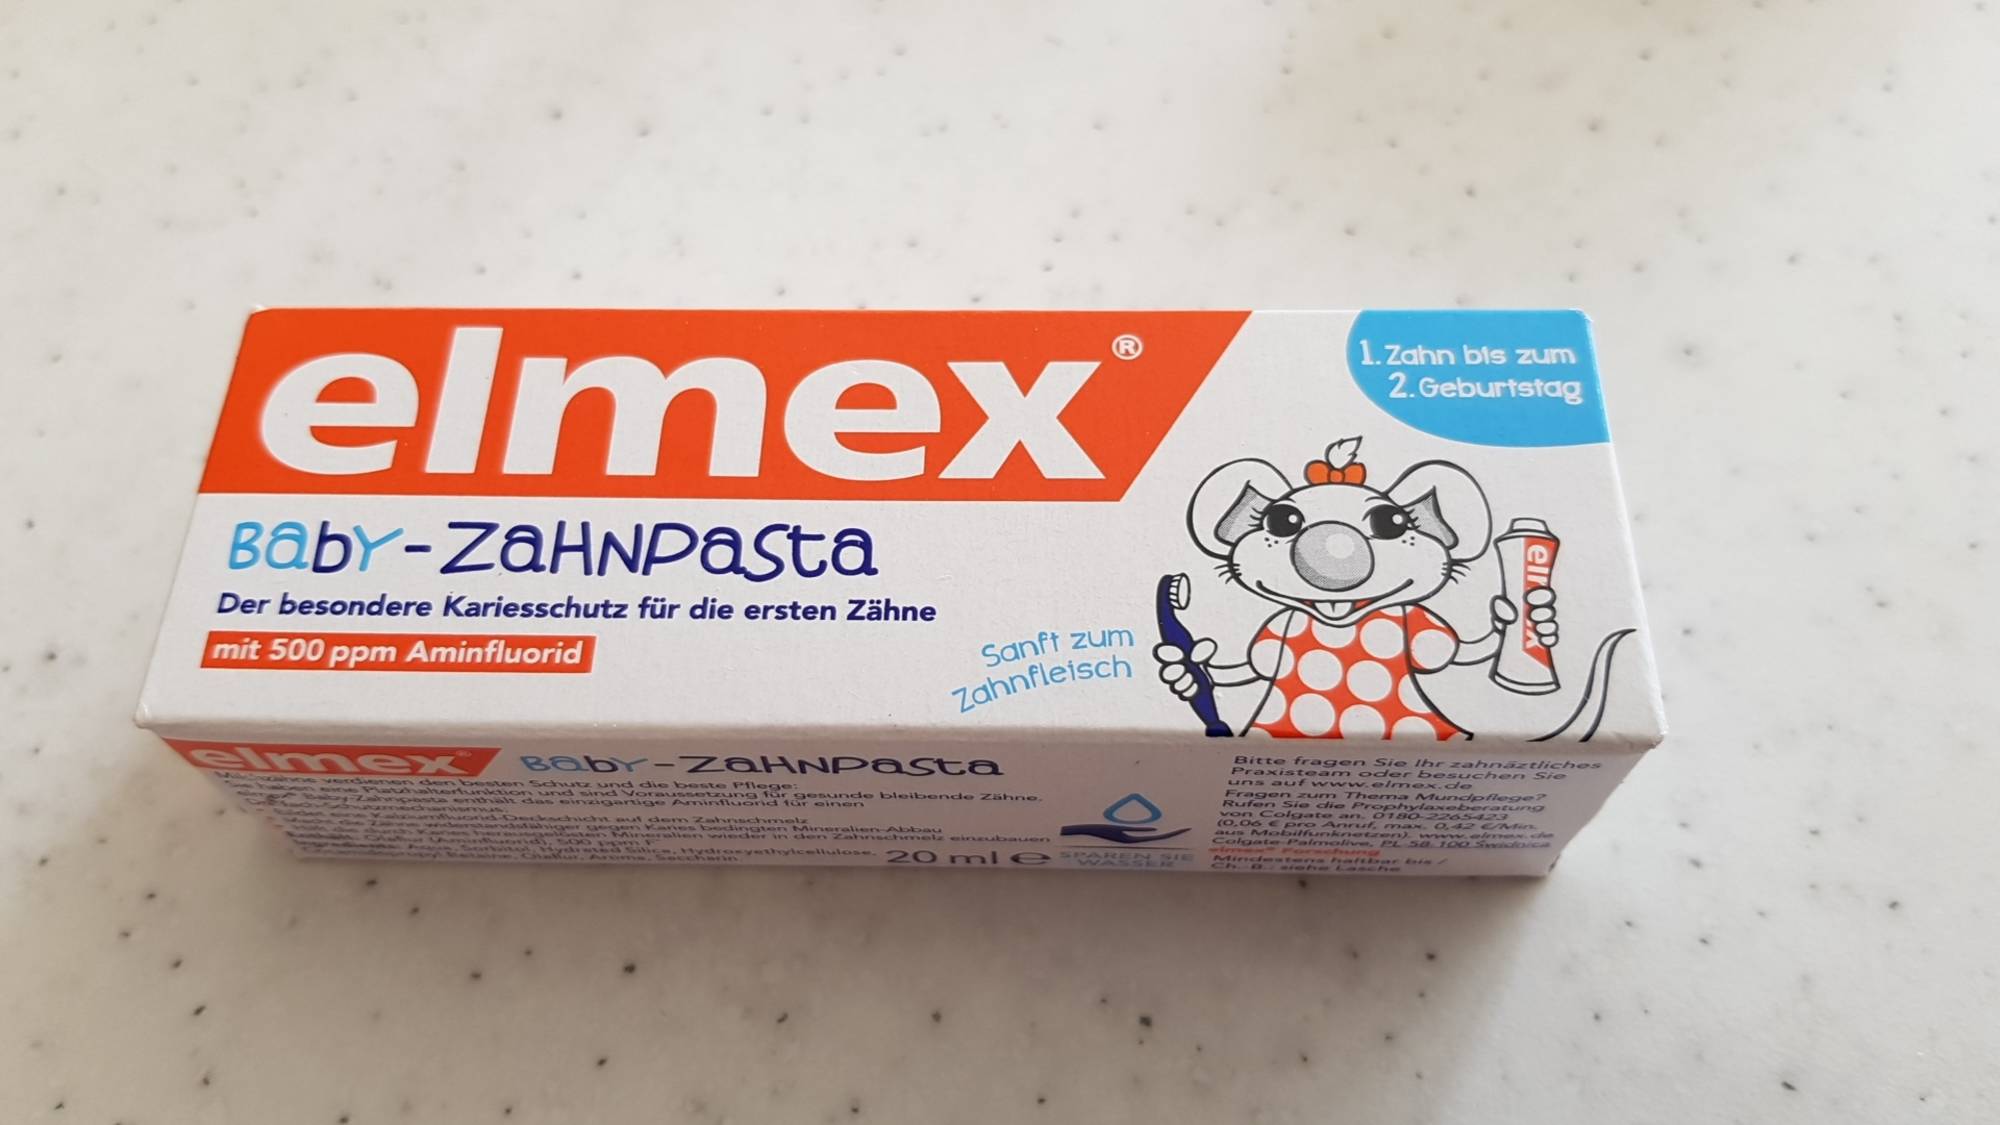 ELMEX - Baby - Zahnpasta